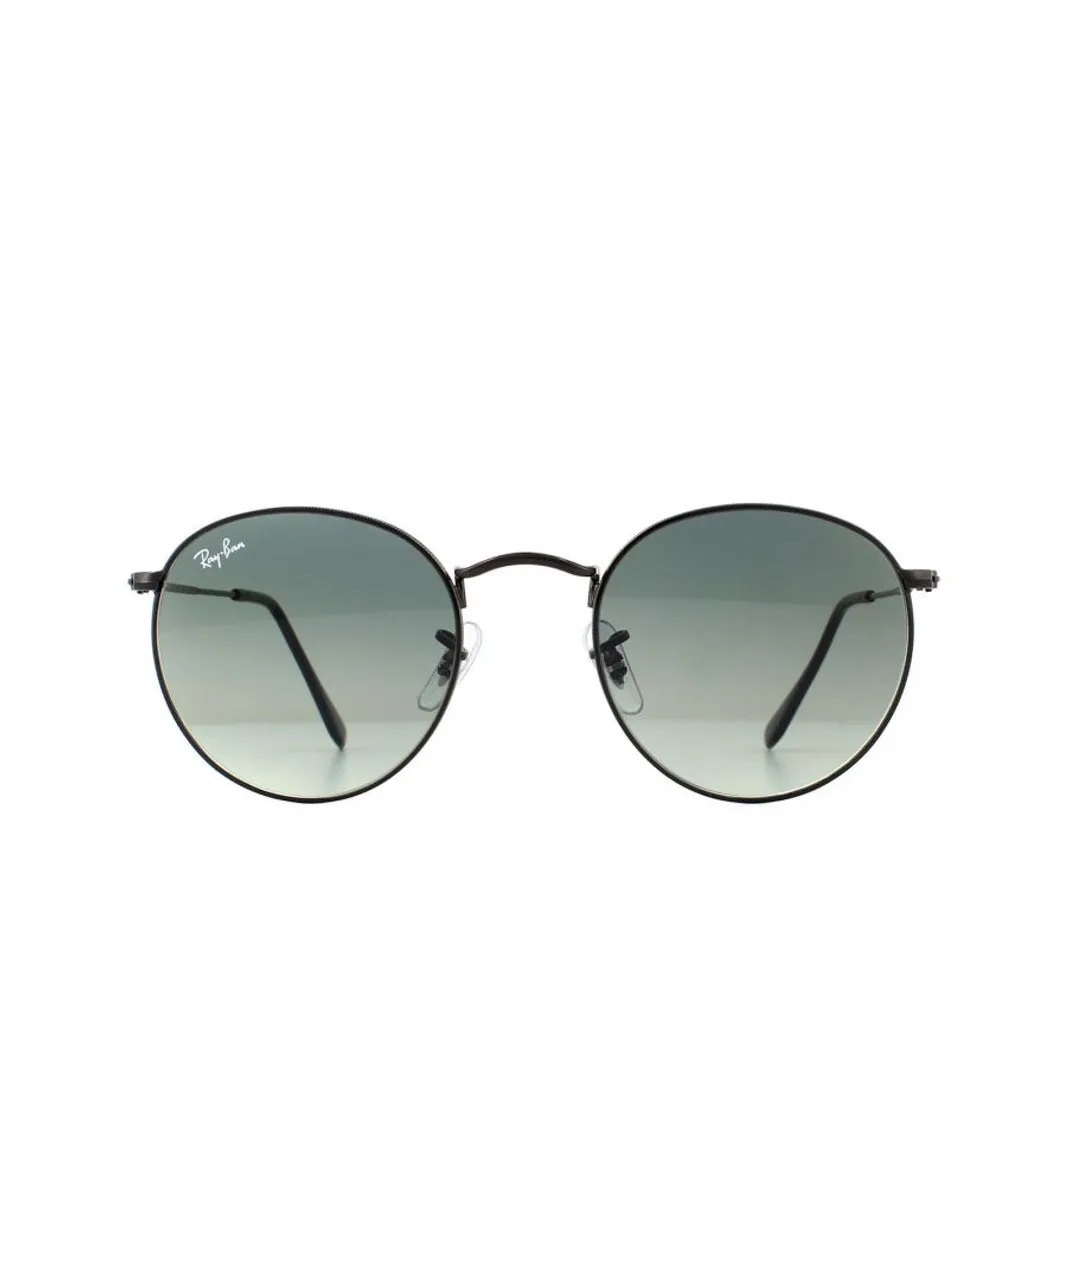 Ray-Ban Unisex Sunglasses Round Flat Lenses 3447N 002/71 Black Grey Gradient 50mm Metal - One